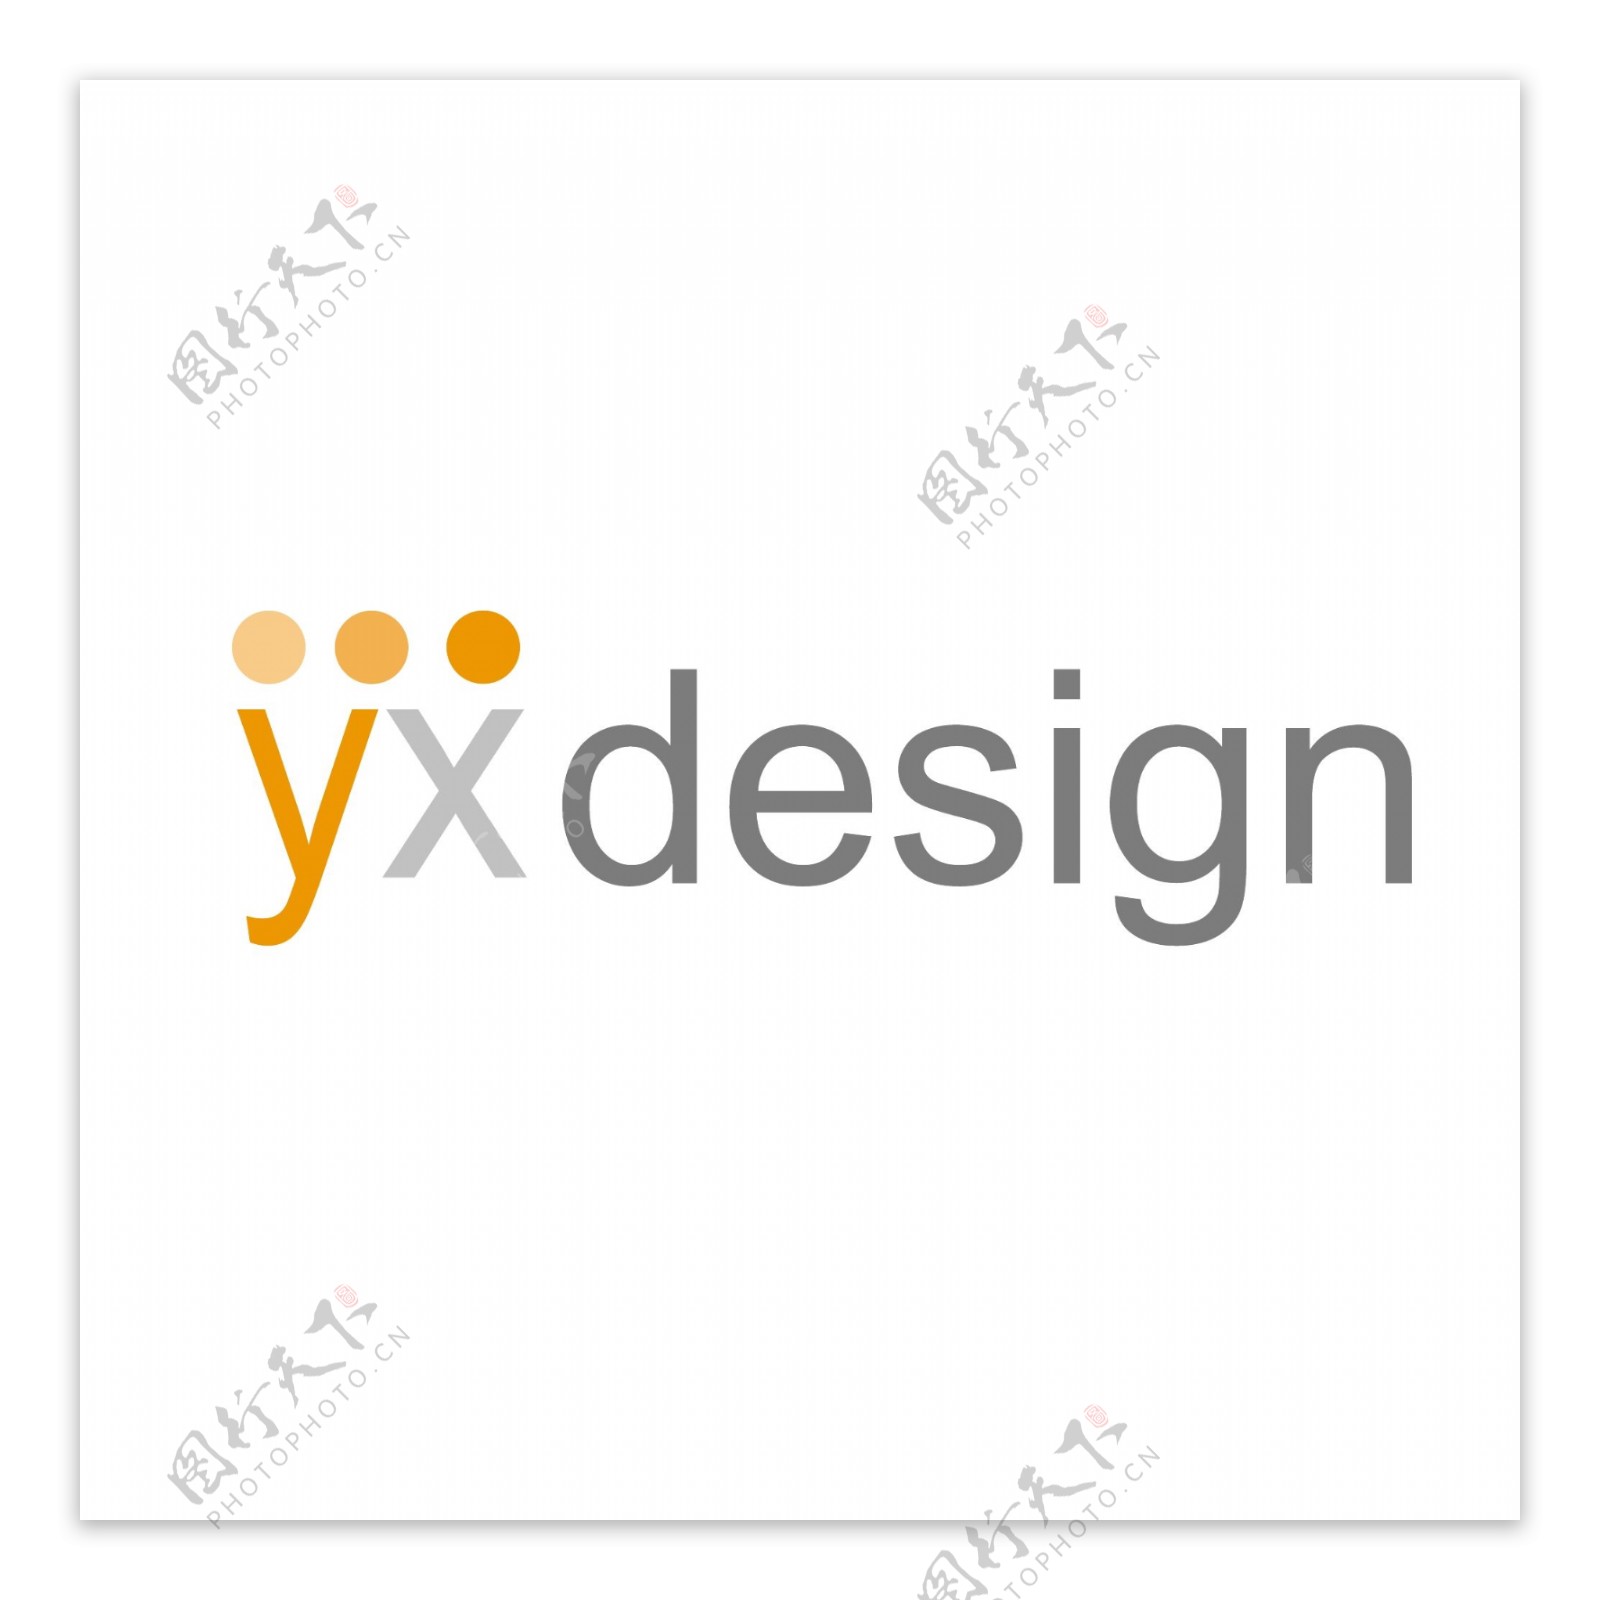 yxdesignlogo设计欣赏yxdesign设计标志下载标志设计欣赏